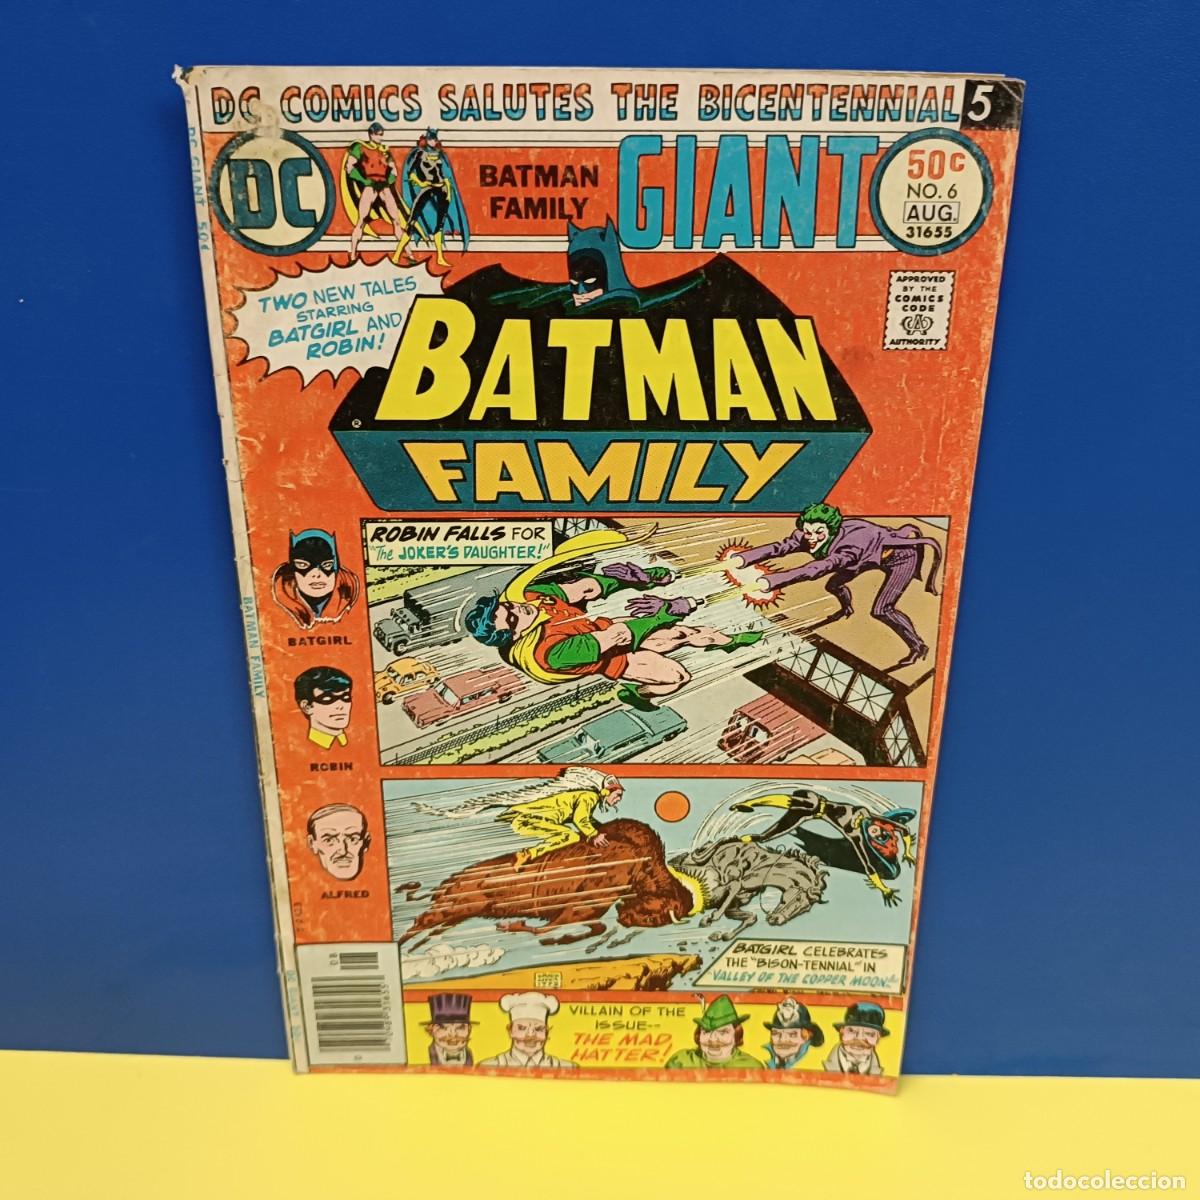 batman family giant - nº 6 aug - comic / tbo dc - Compra venta en  todocoleccion